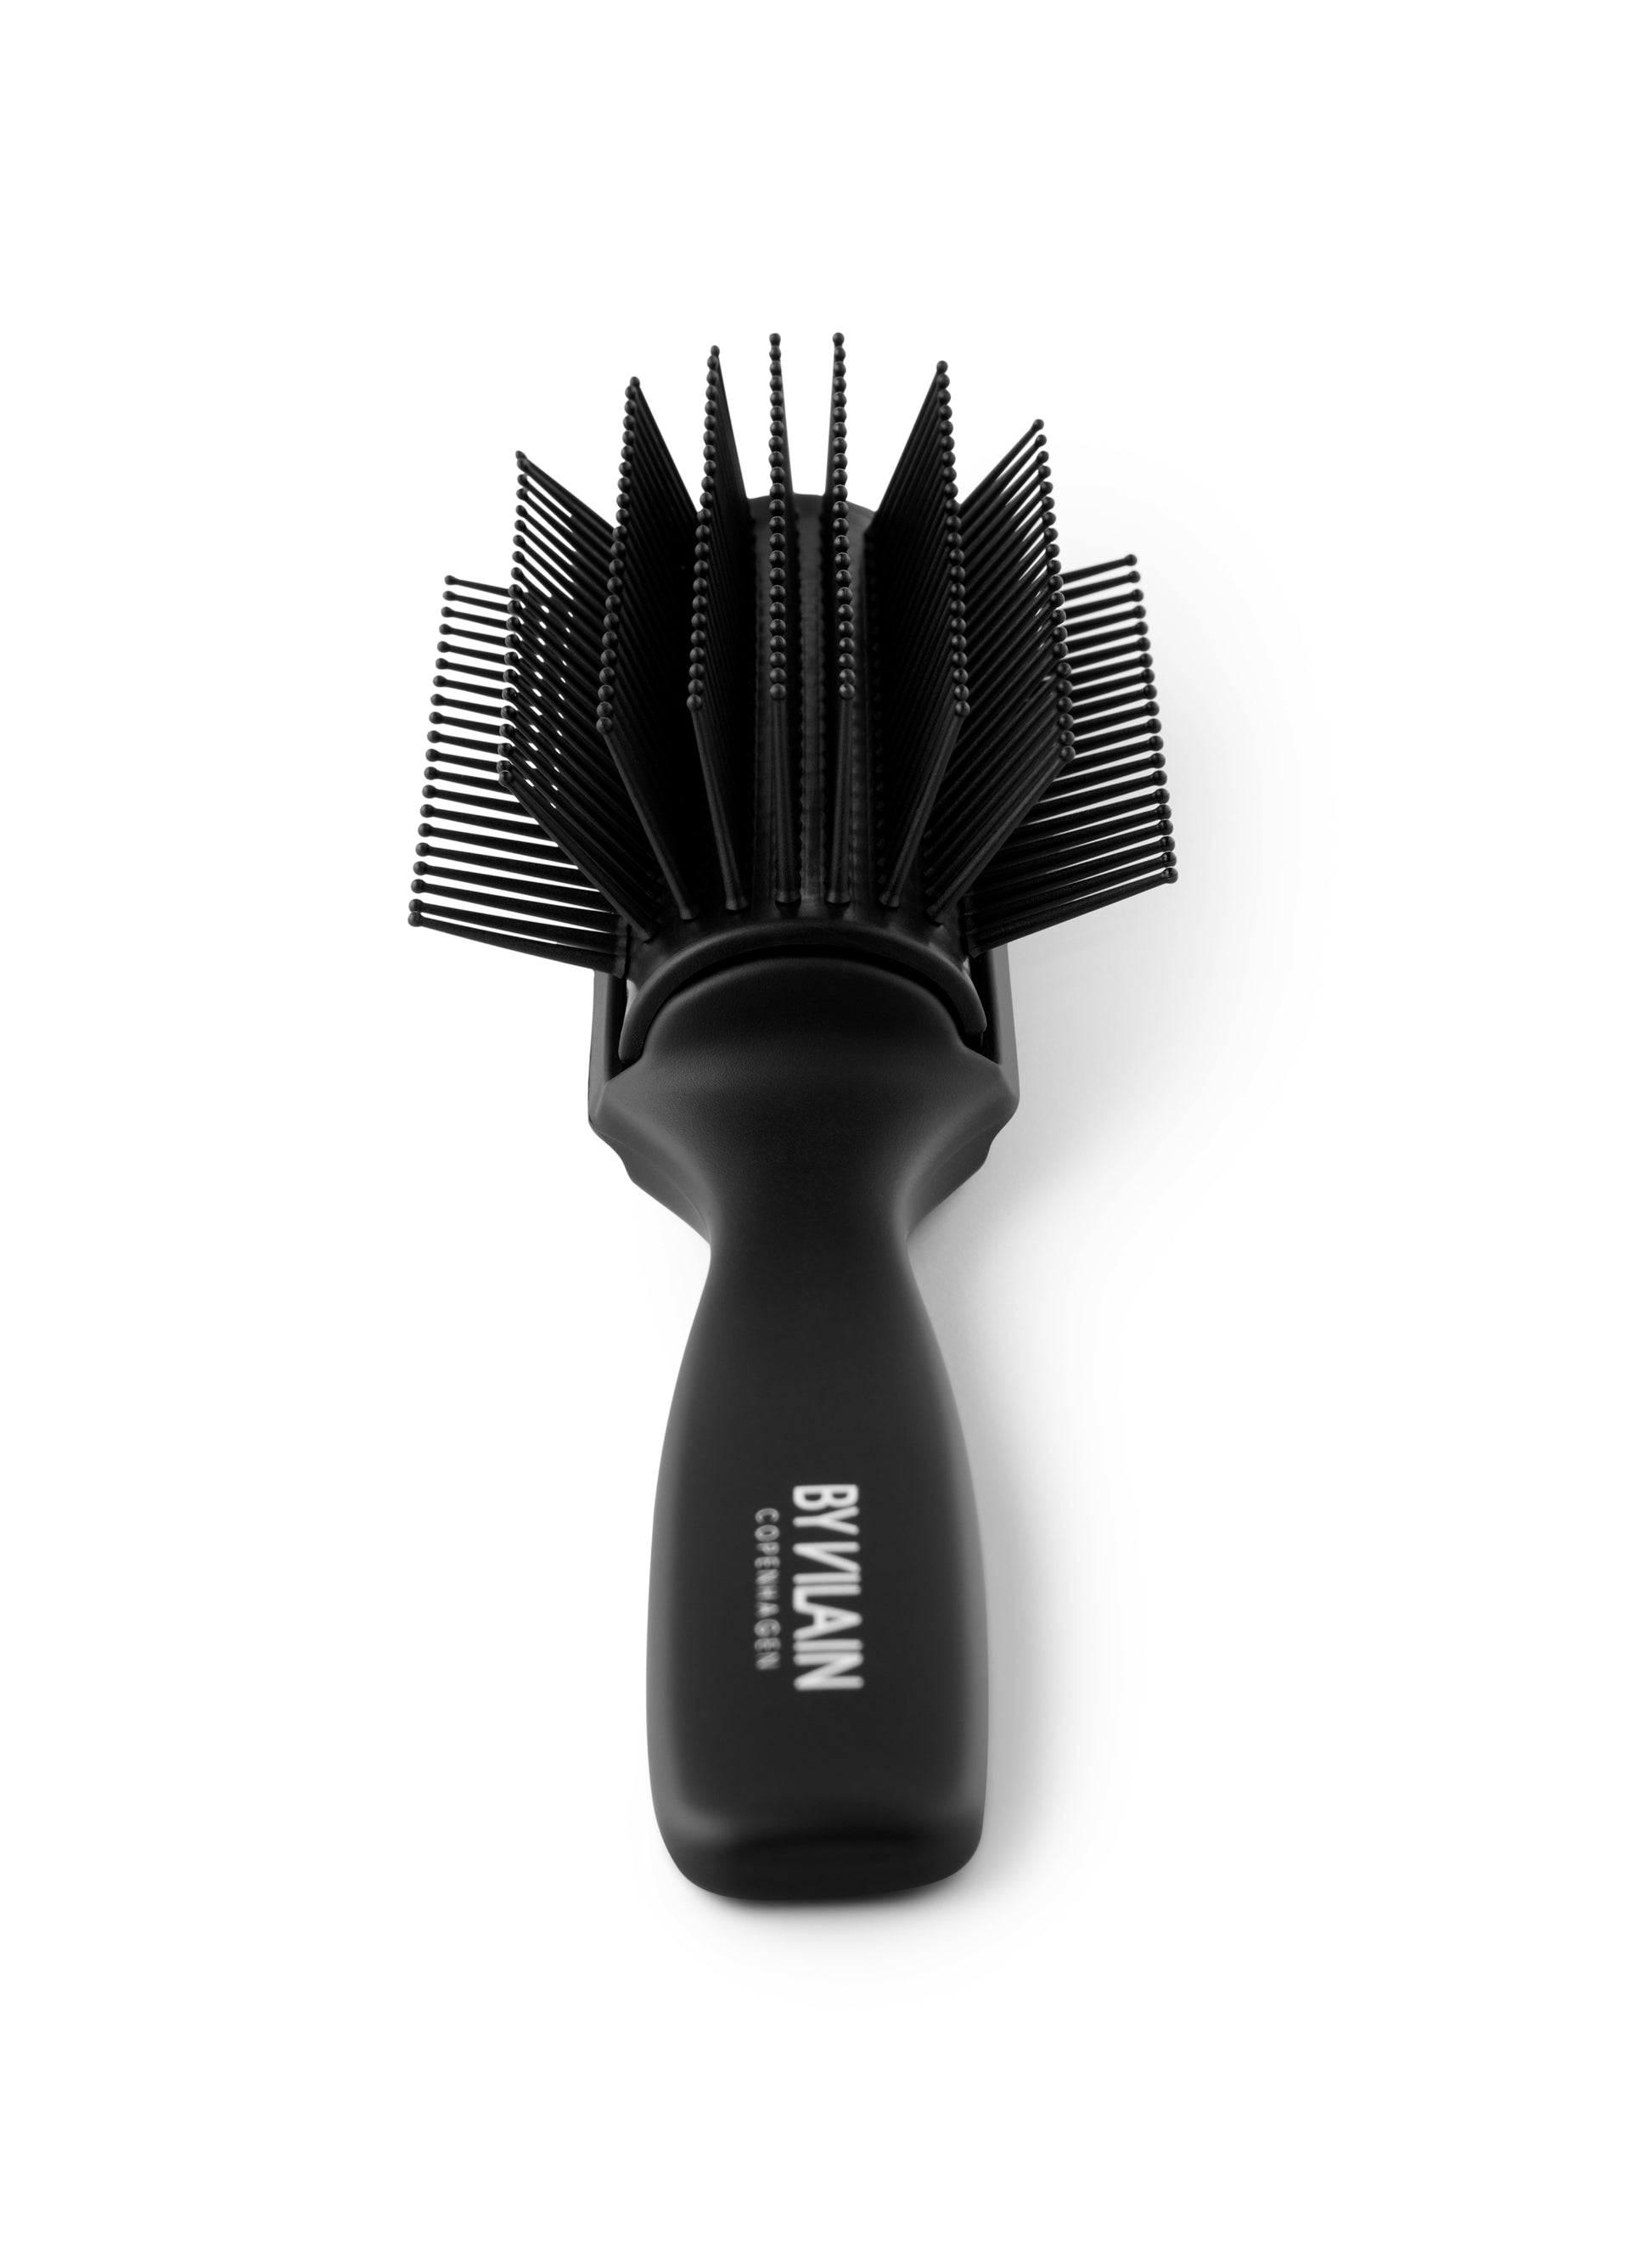 By Vilain 9-Row Brush - Masen Products (Pty) LTD